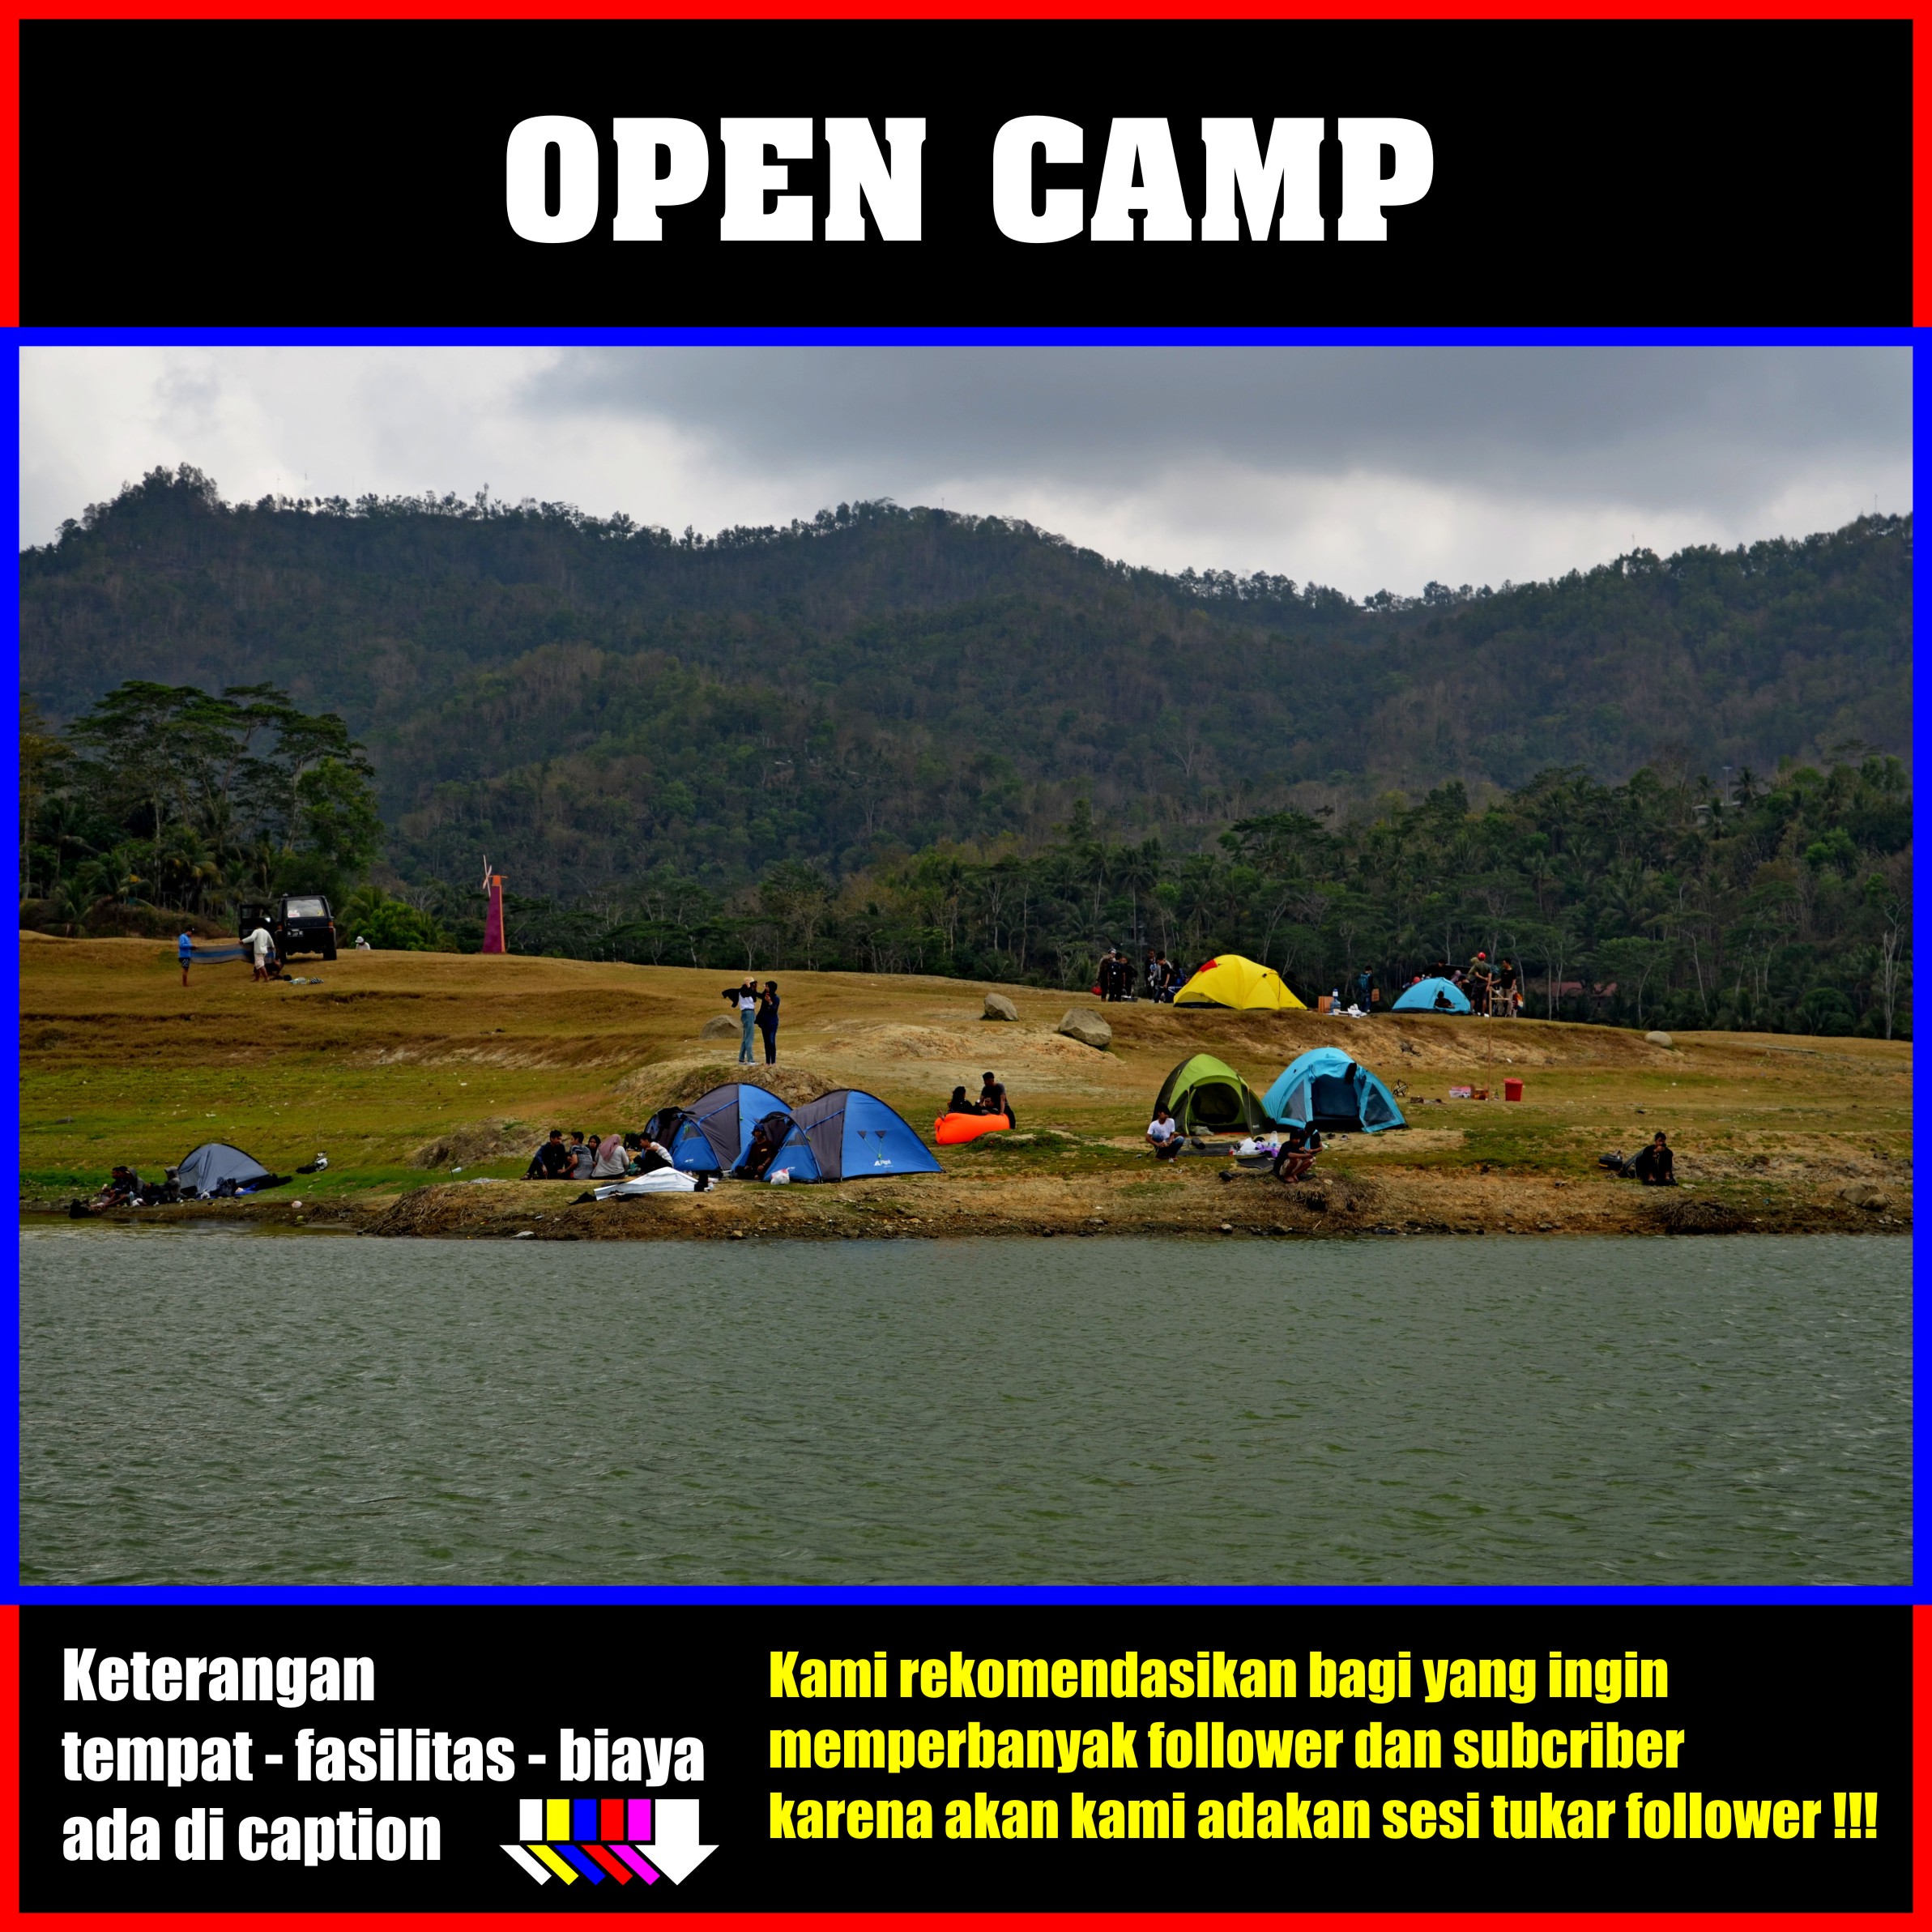 Open camp